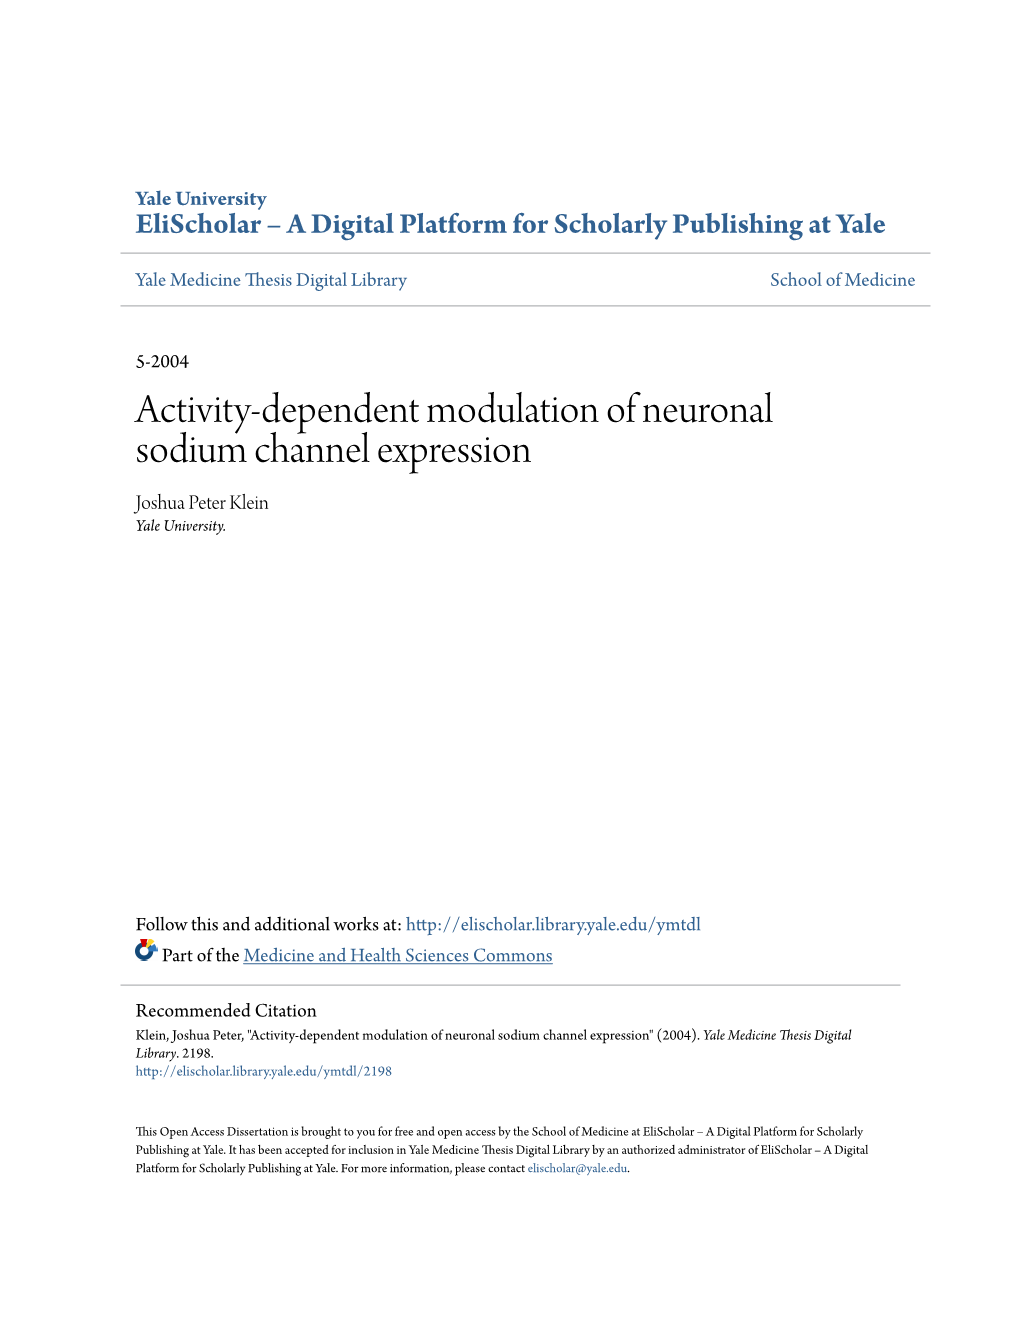 Activity-Dependent Modulation of Neuronal Sodium Channel Expression Joshua Peter Klein Yale University